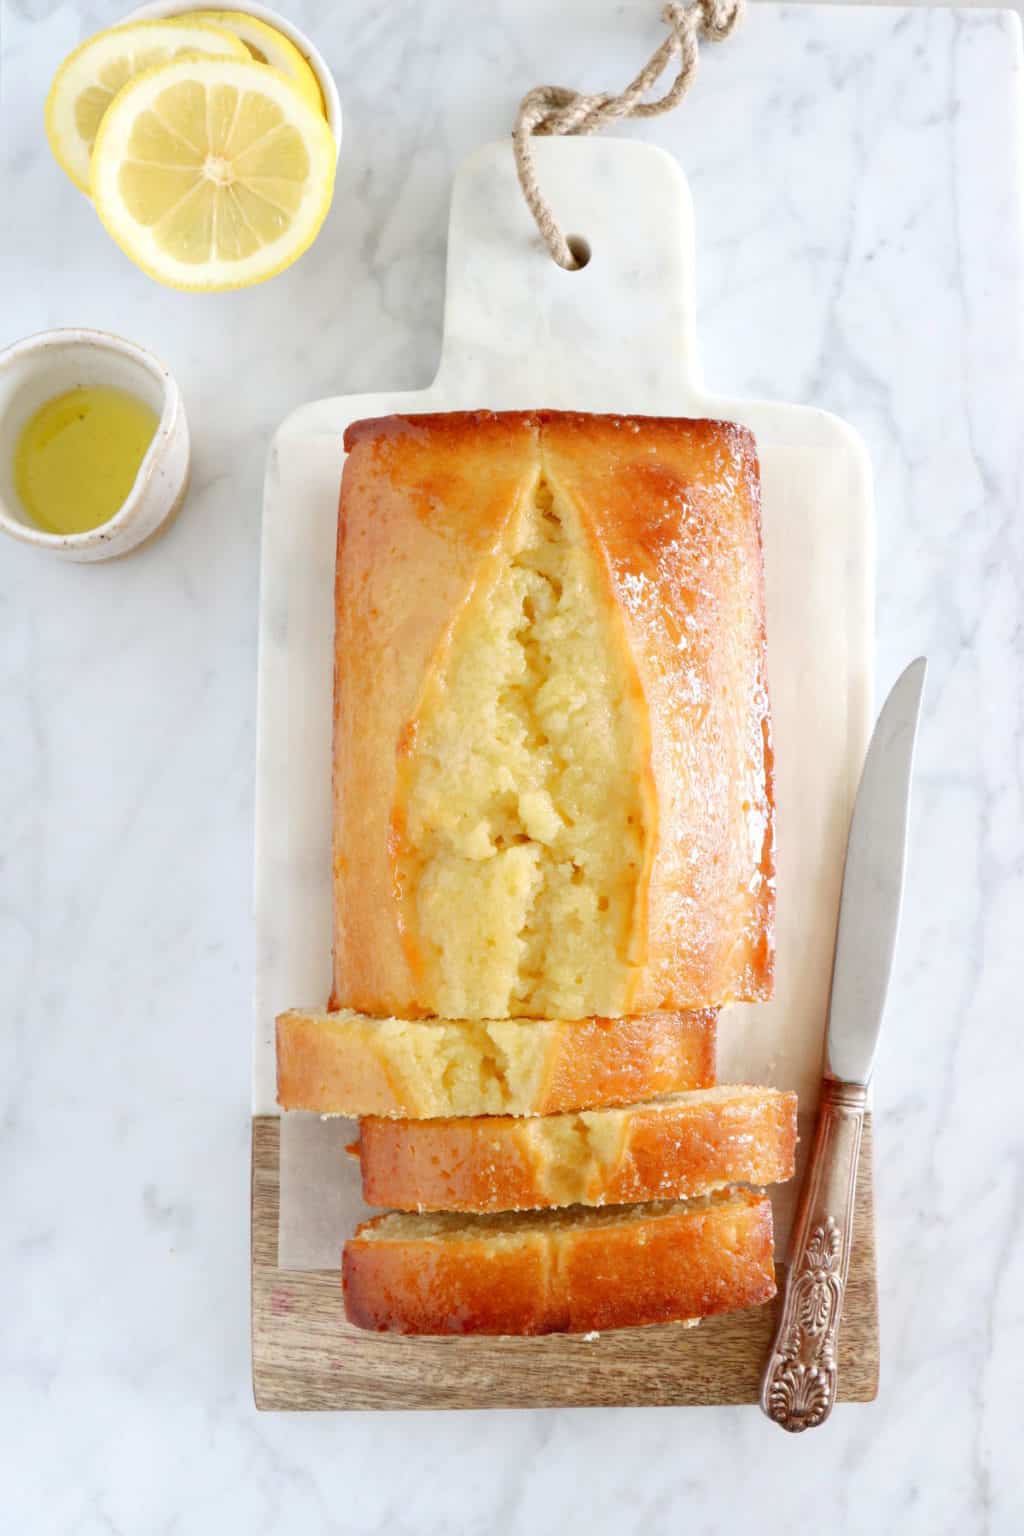 Lemon Olive Oil Loaf Cake (The Ultimate Recipe) - Del's cooking twist